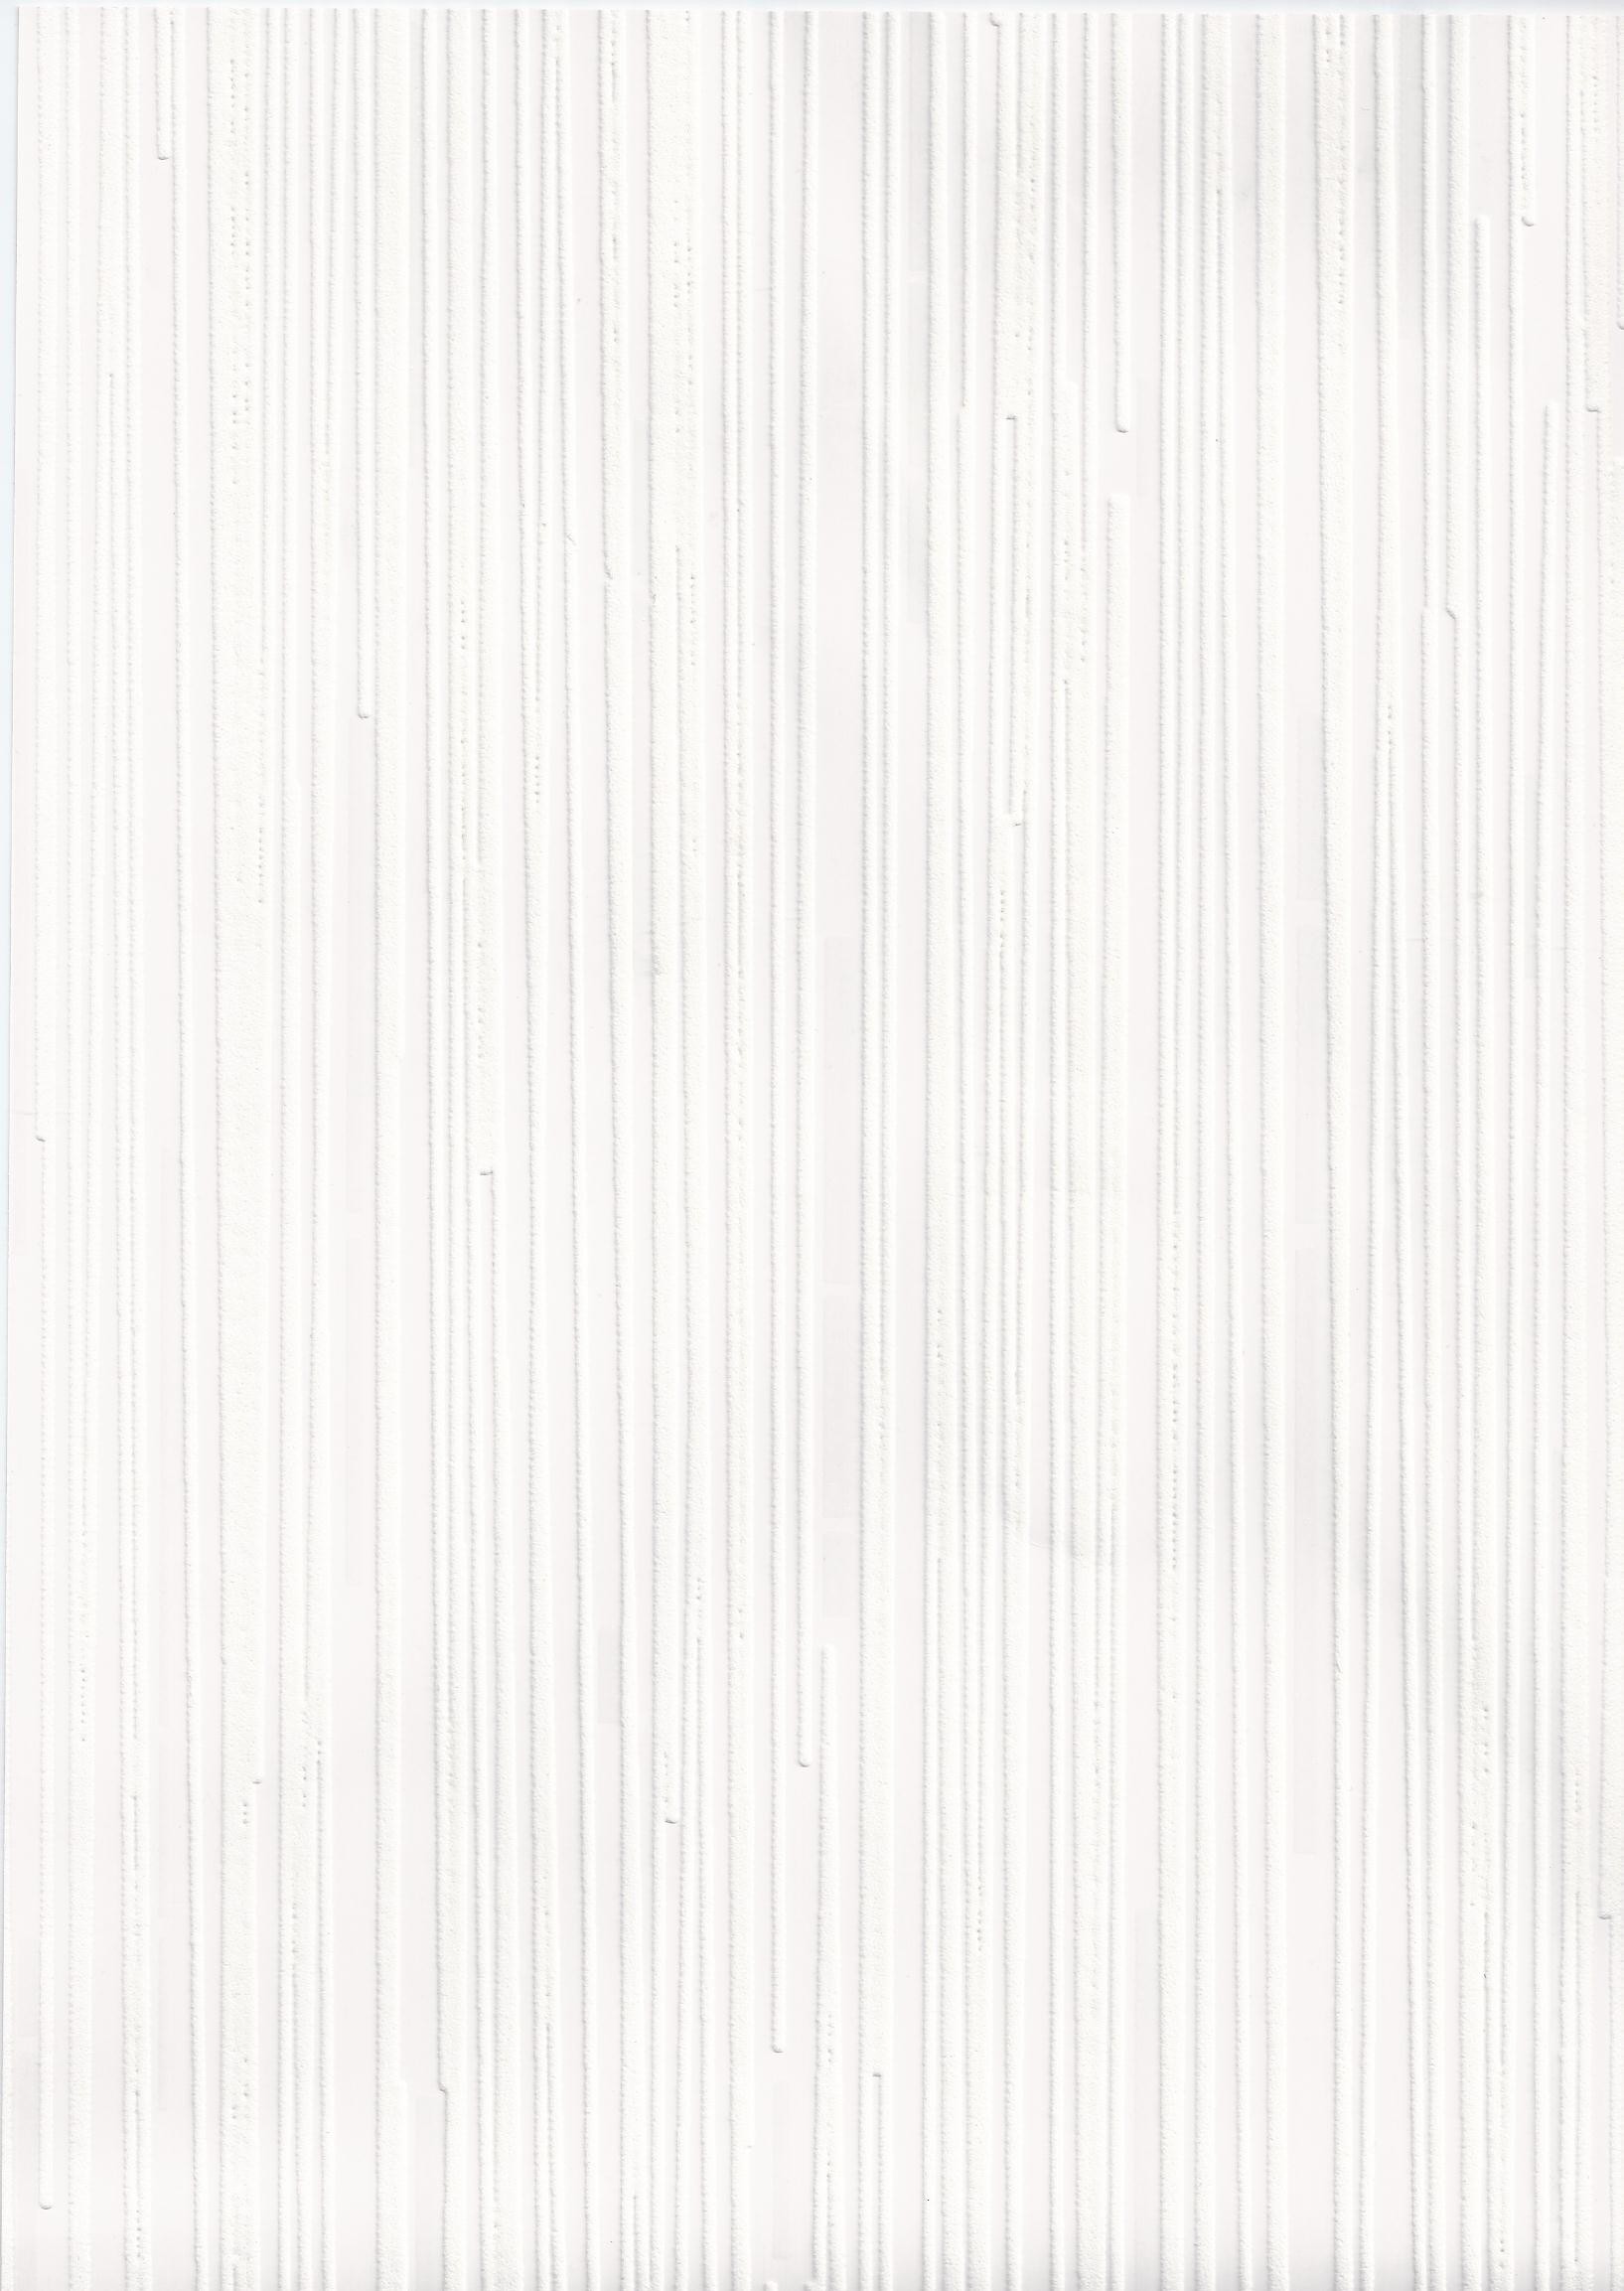 Plain White Wallpaper 51 Wallpapers